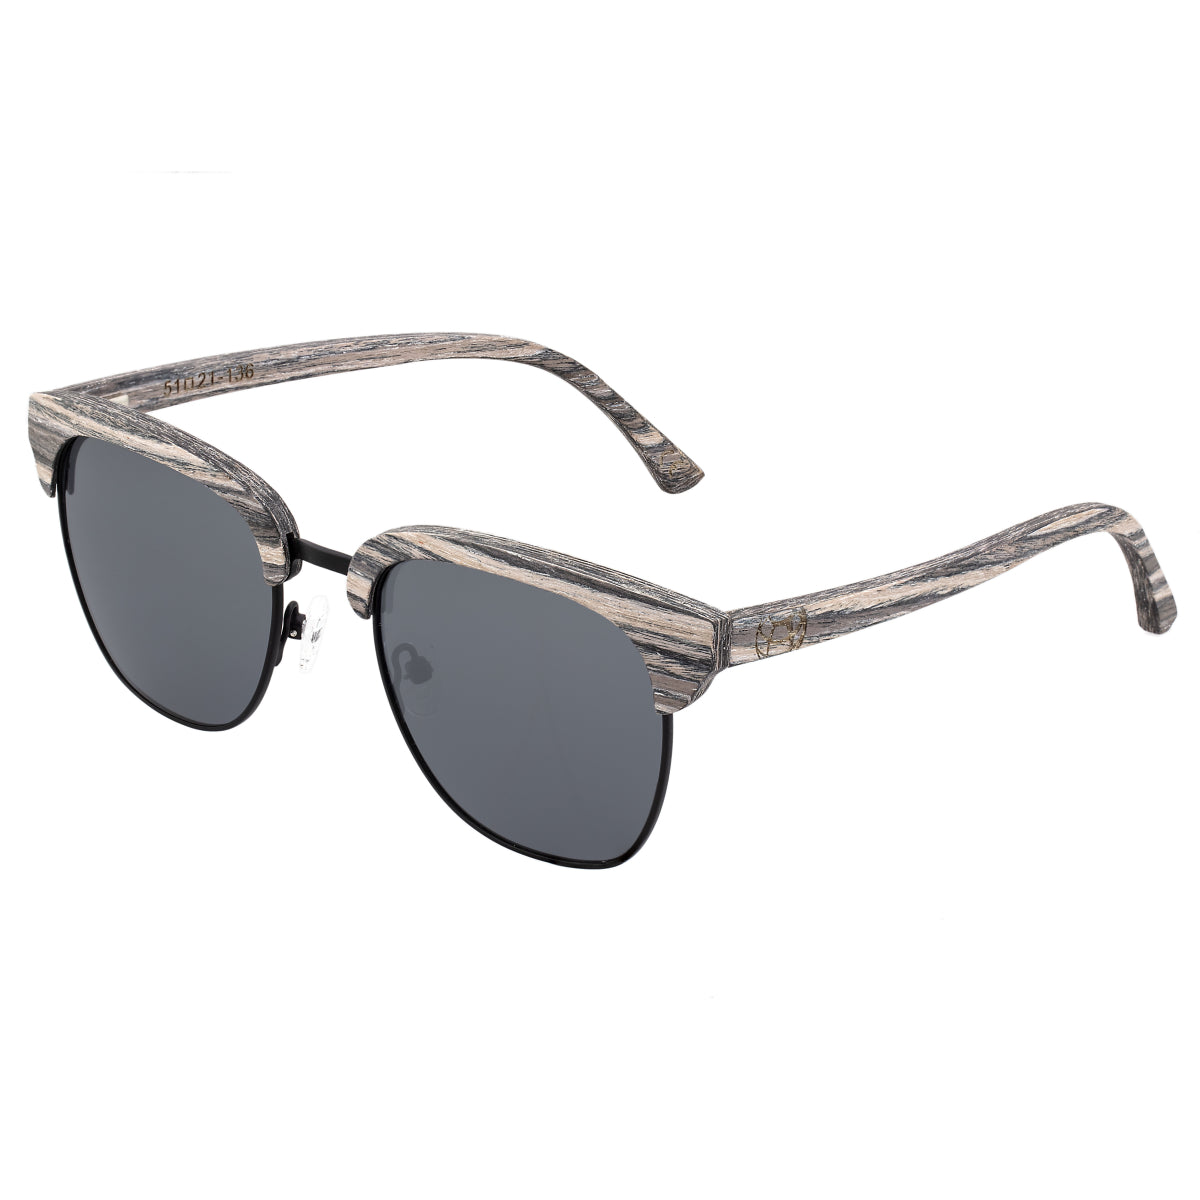 Earth Wood Sassel Polarized Sunglasses - Grey Vine/Black  - ESG045GB